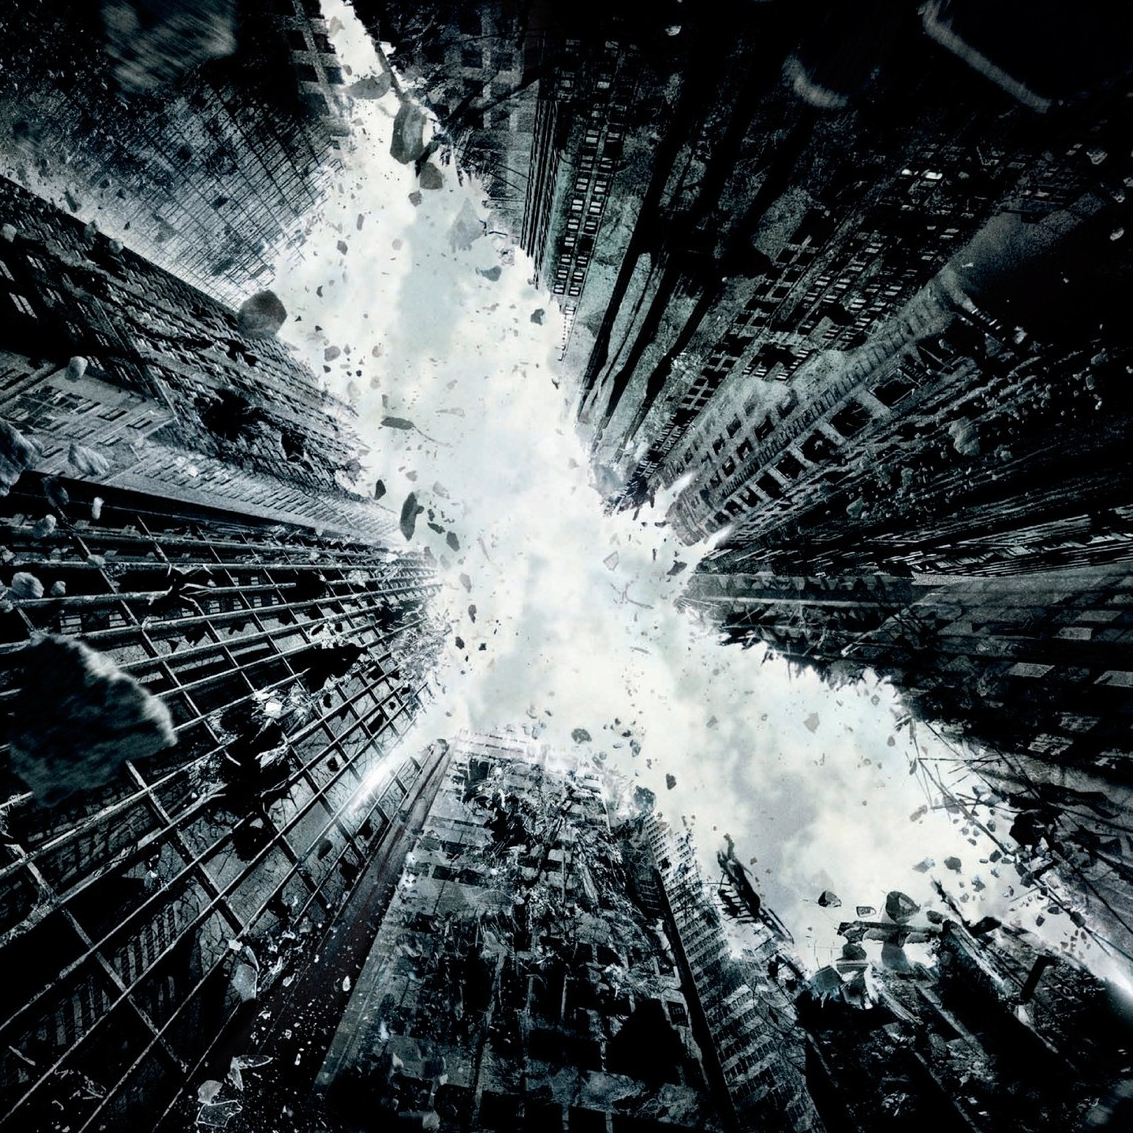 Batman: The Dark Knight Rises Soundtrack Cover by Fastermax on DeviantArt